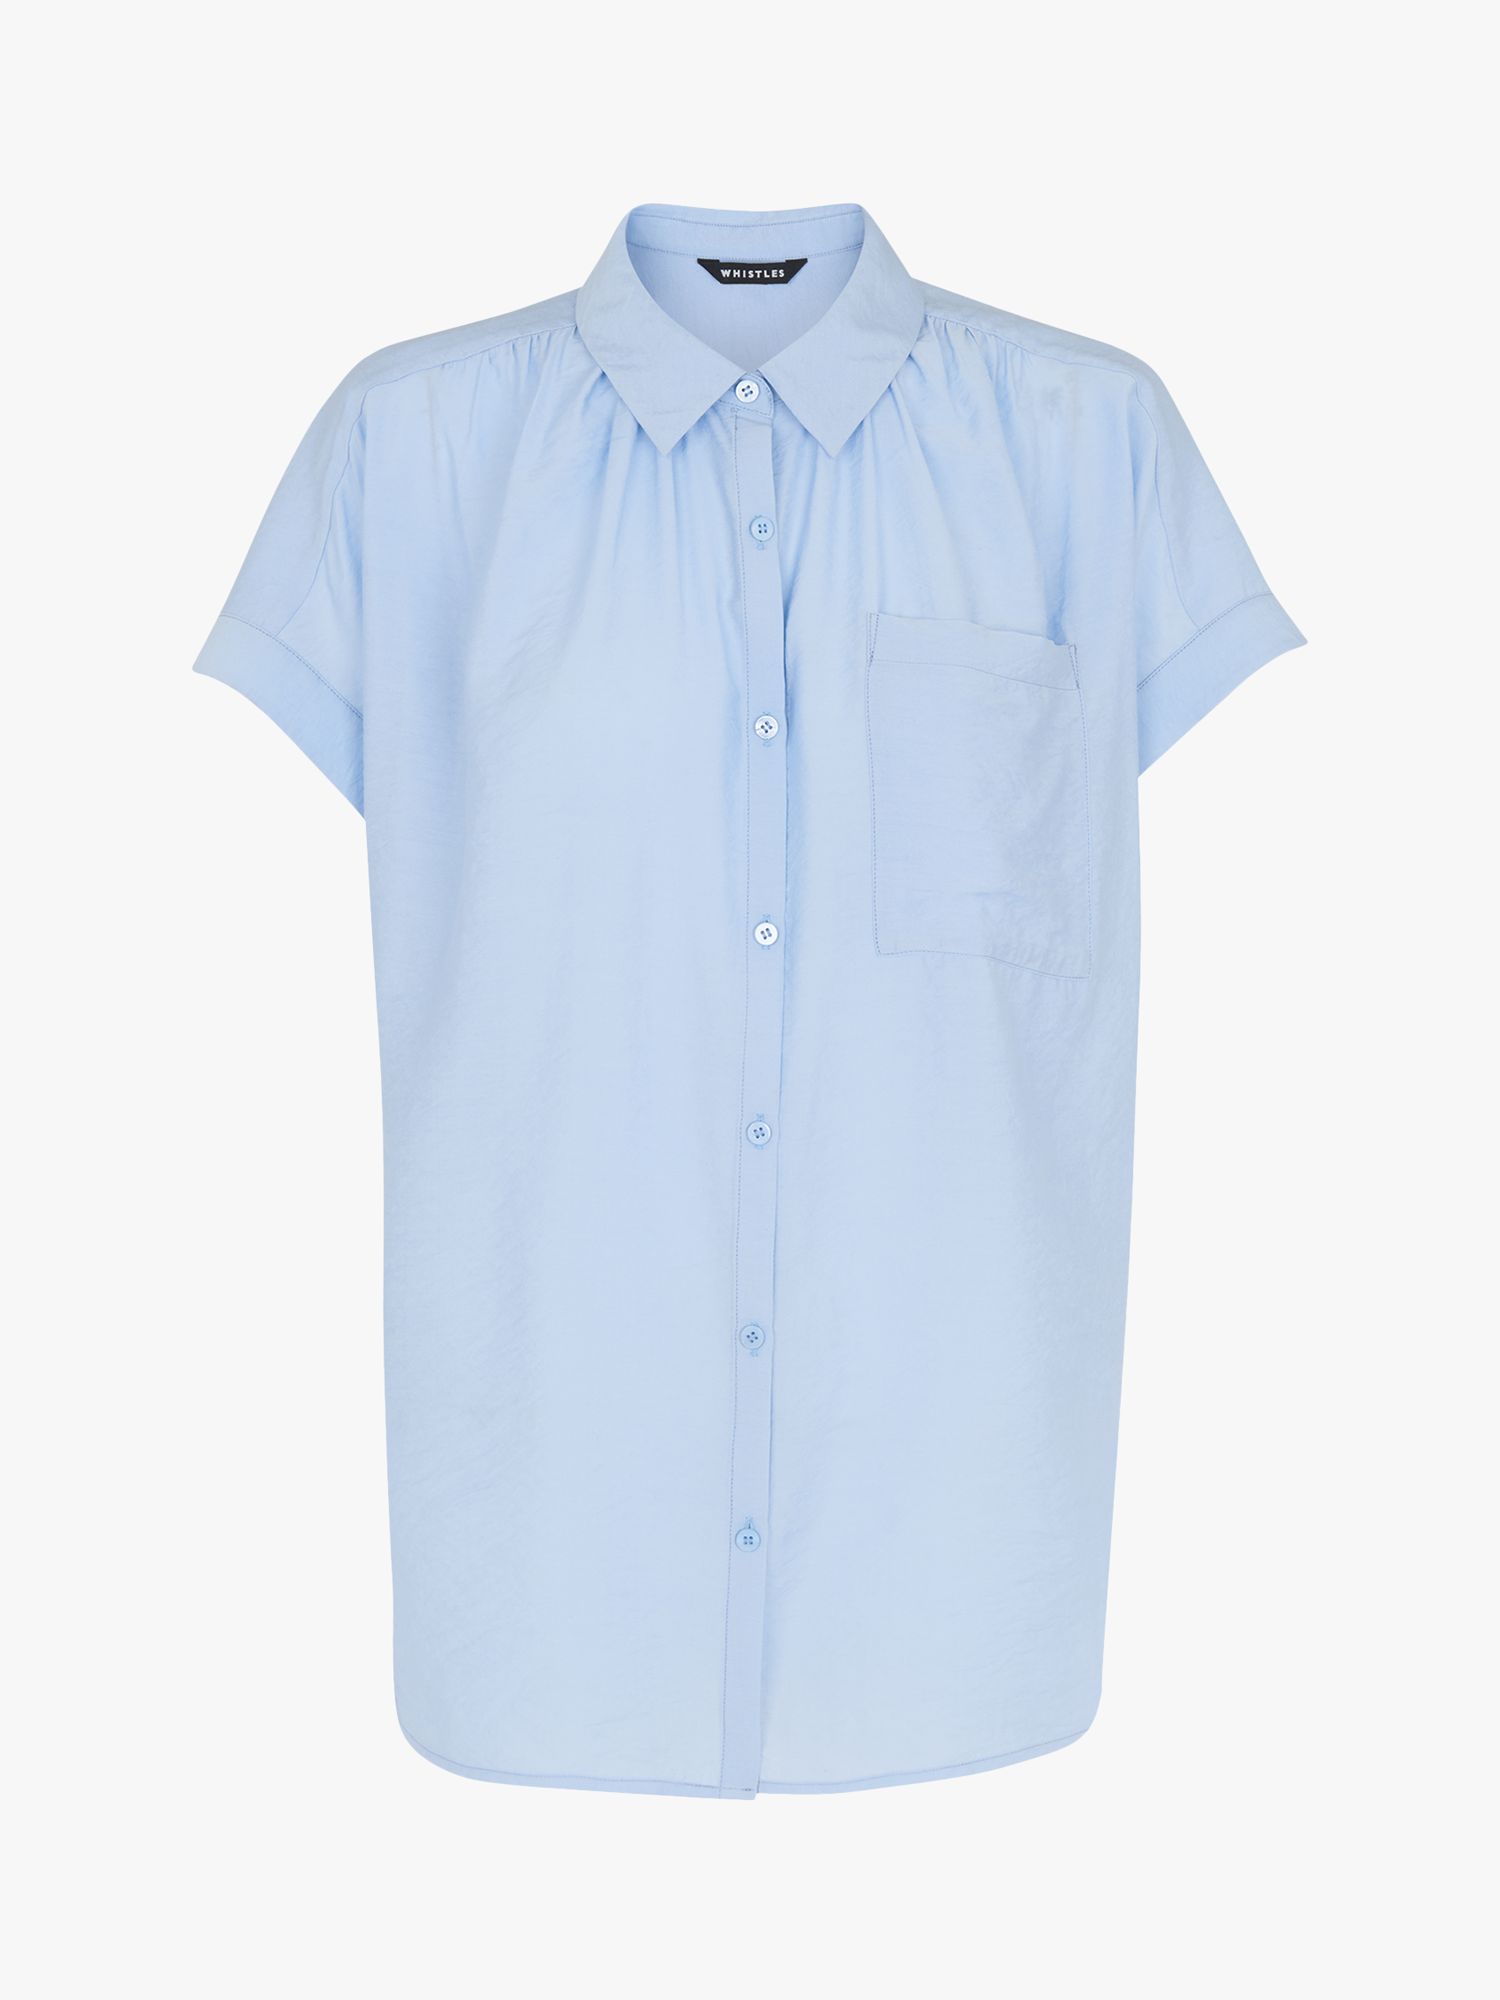 Whistles Nicola Button Through Shirt, Pale Blue at John Lewis & Partners